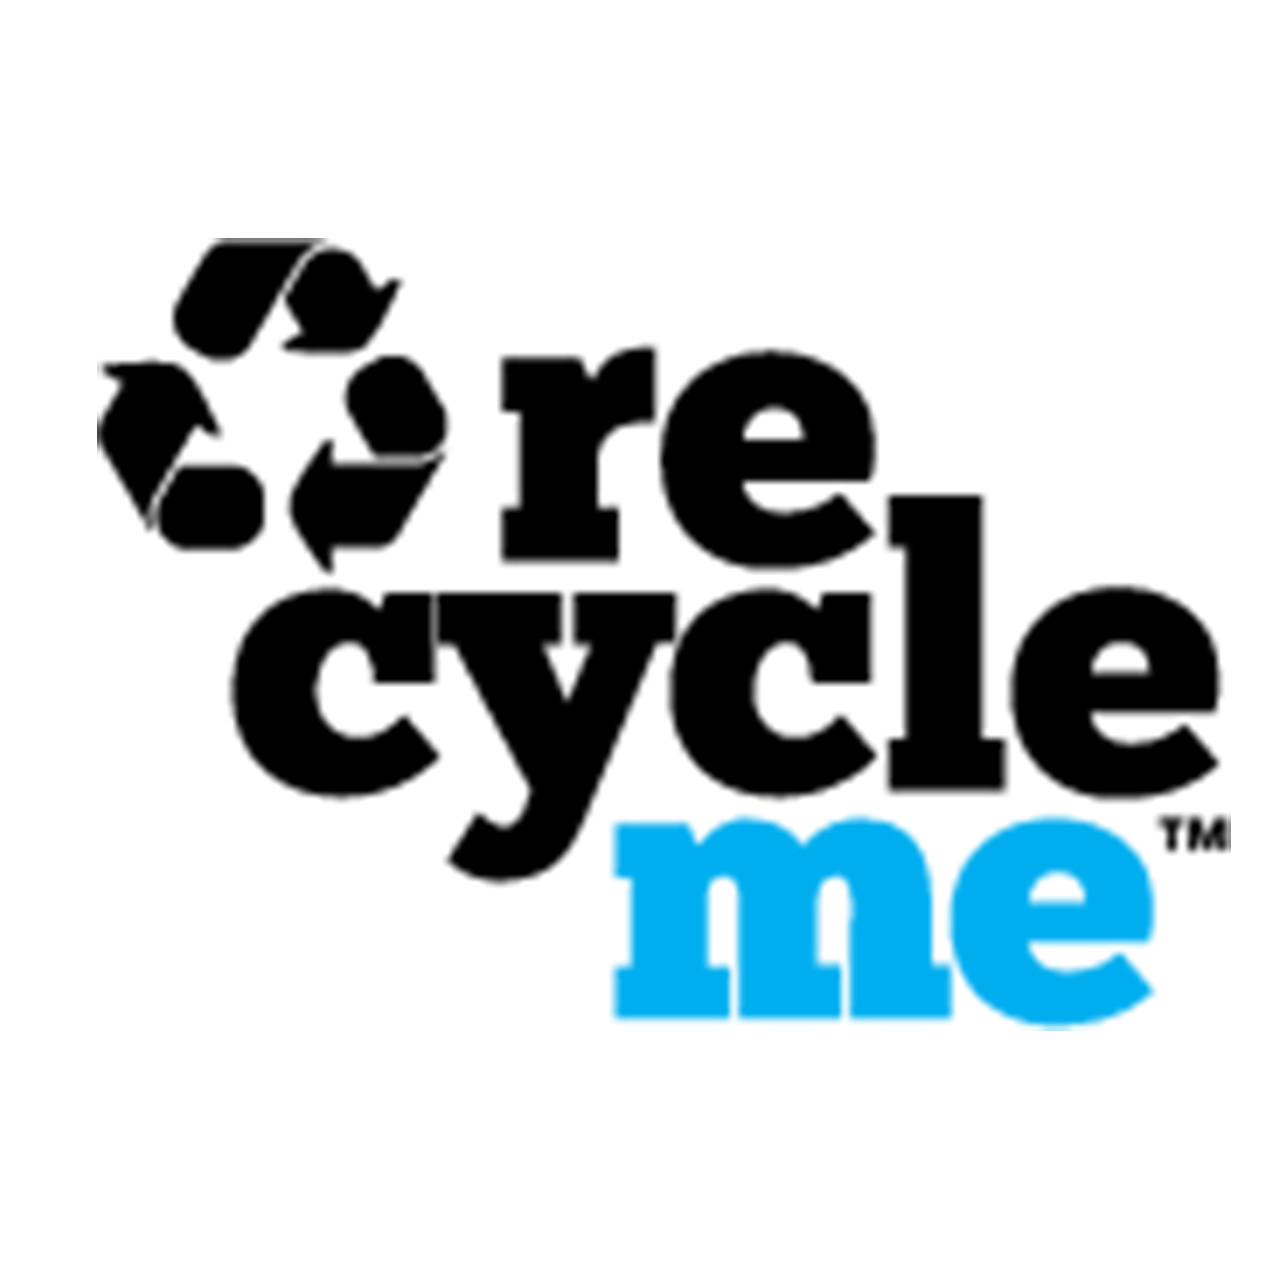 Image of RecycleMe logo